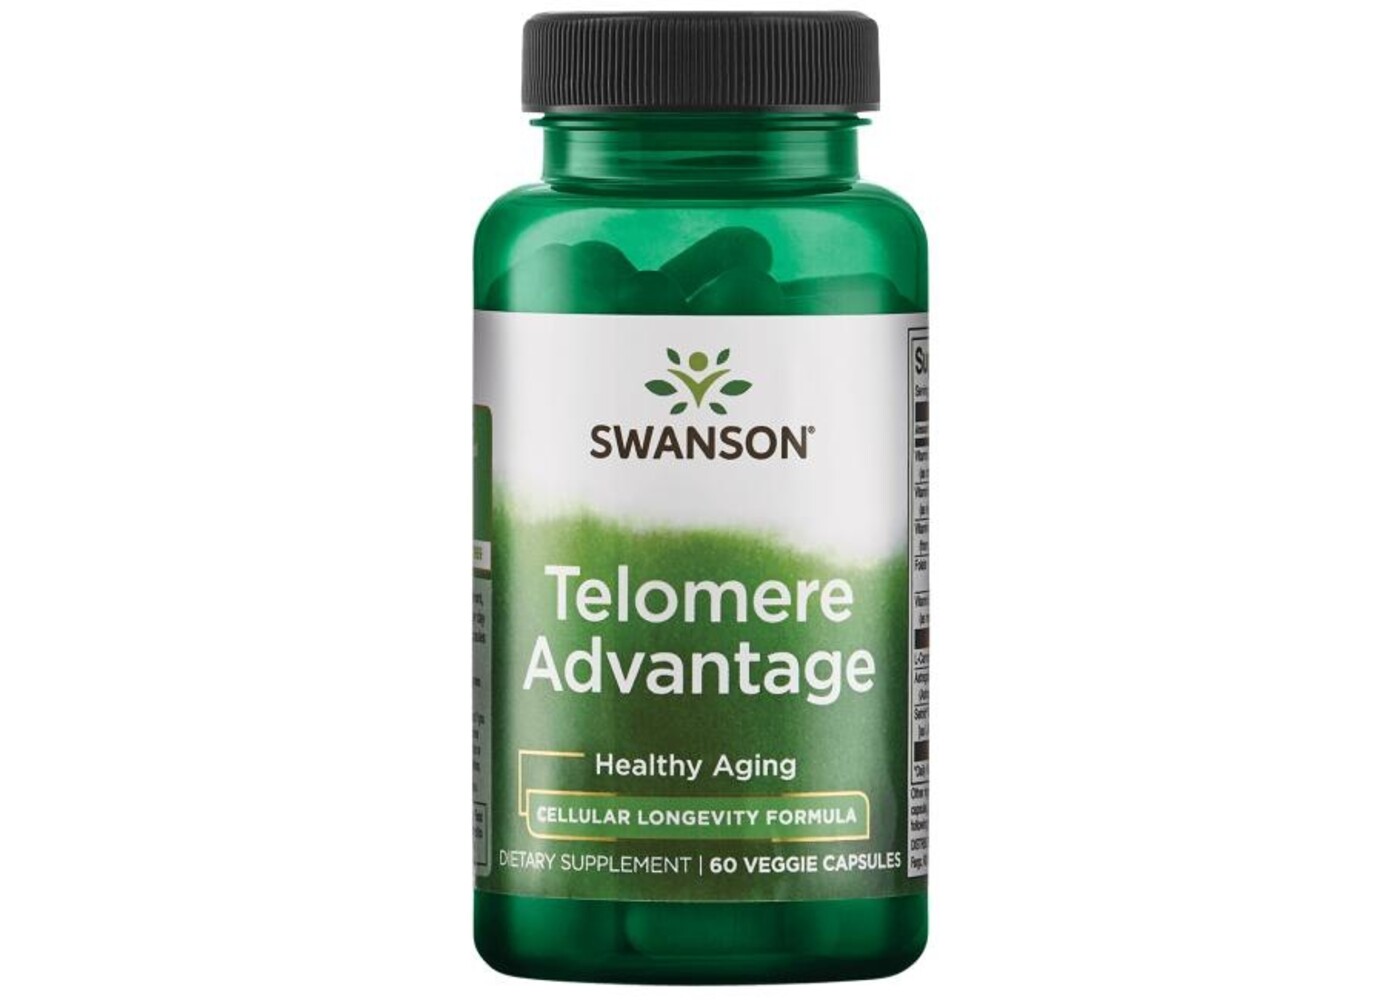 Swanson Telomere Advantage, 60 Veg Caps